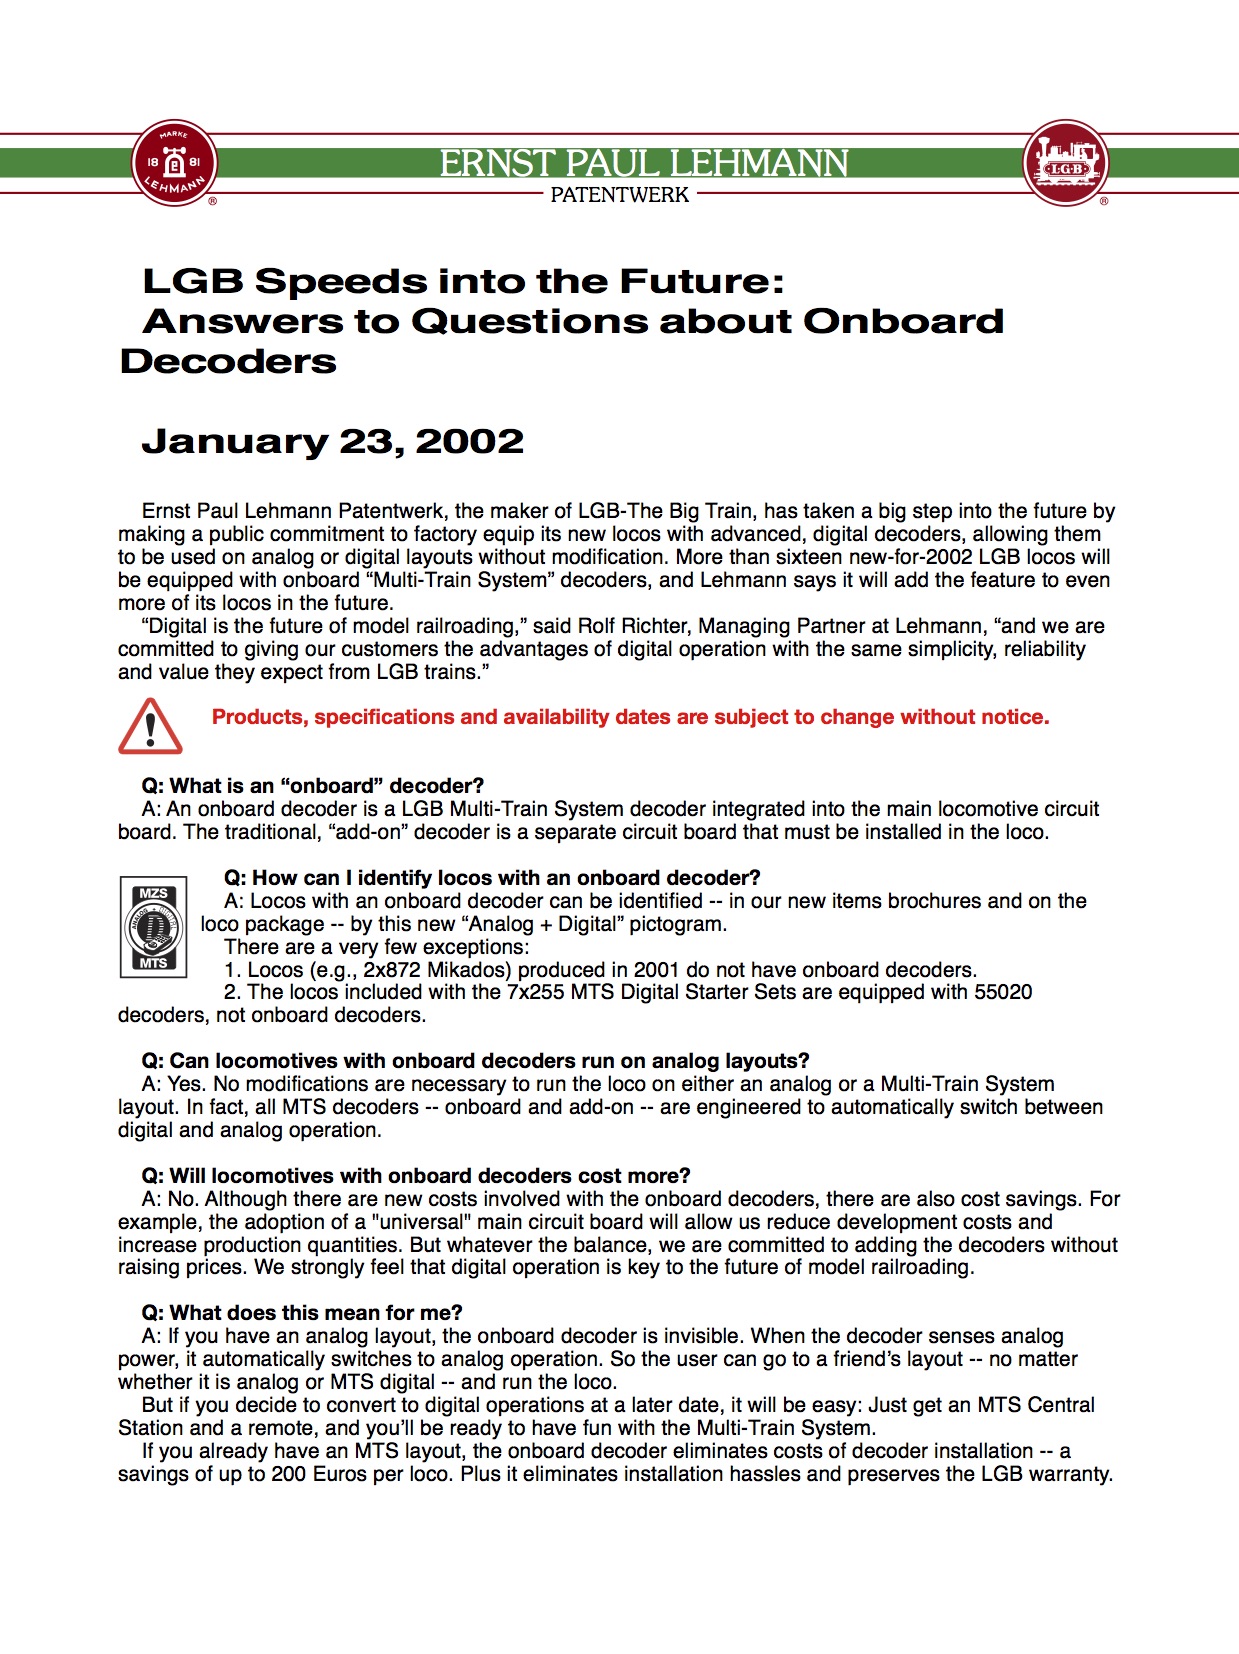 LGB White Paper 2002 - Decoder-on-Board Q&A, English